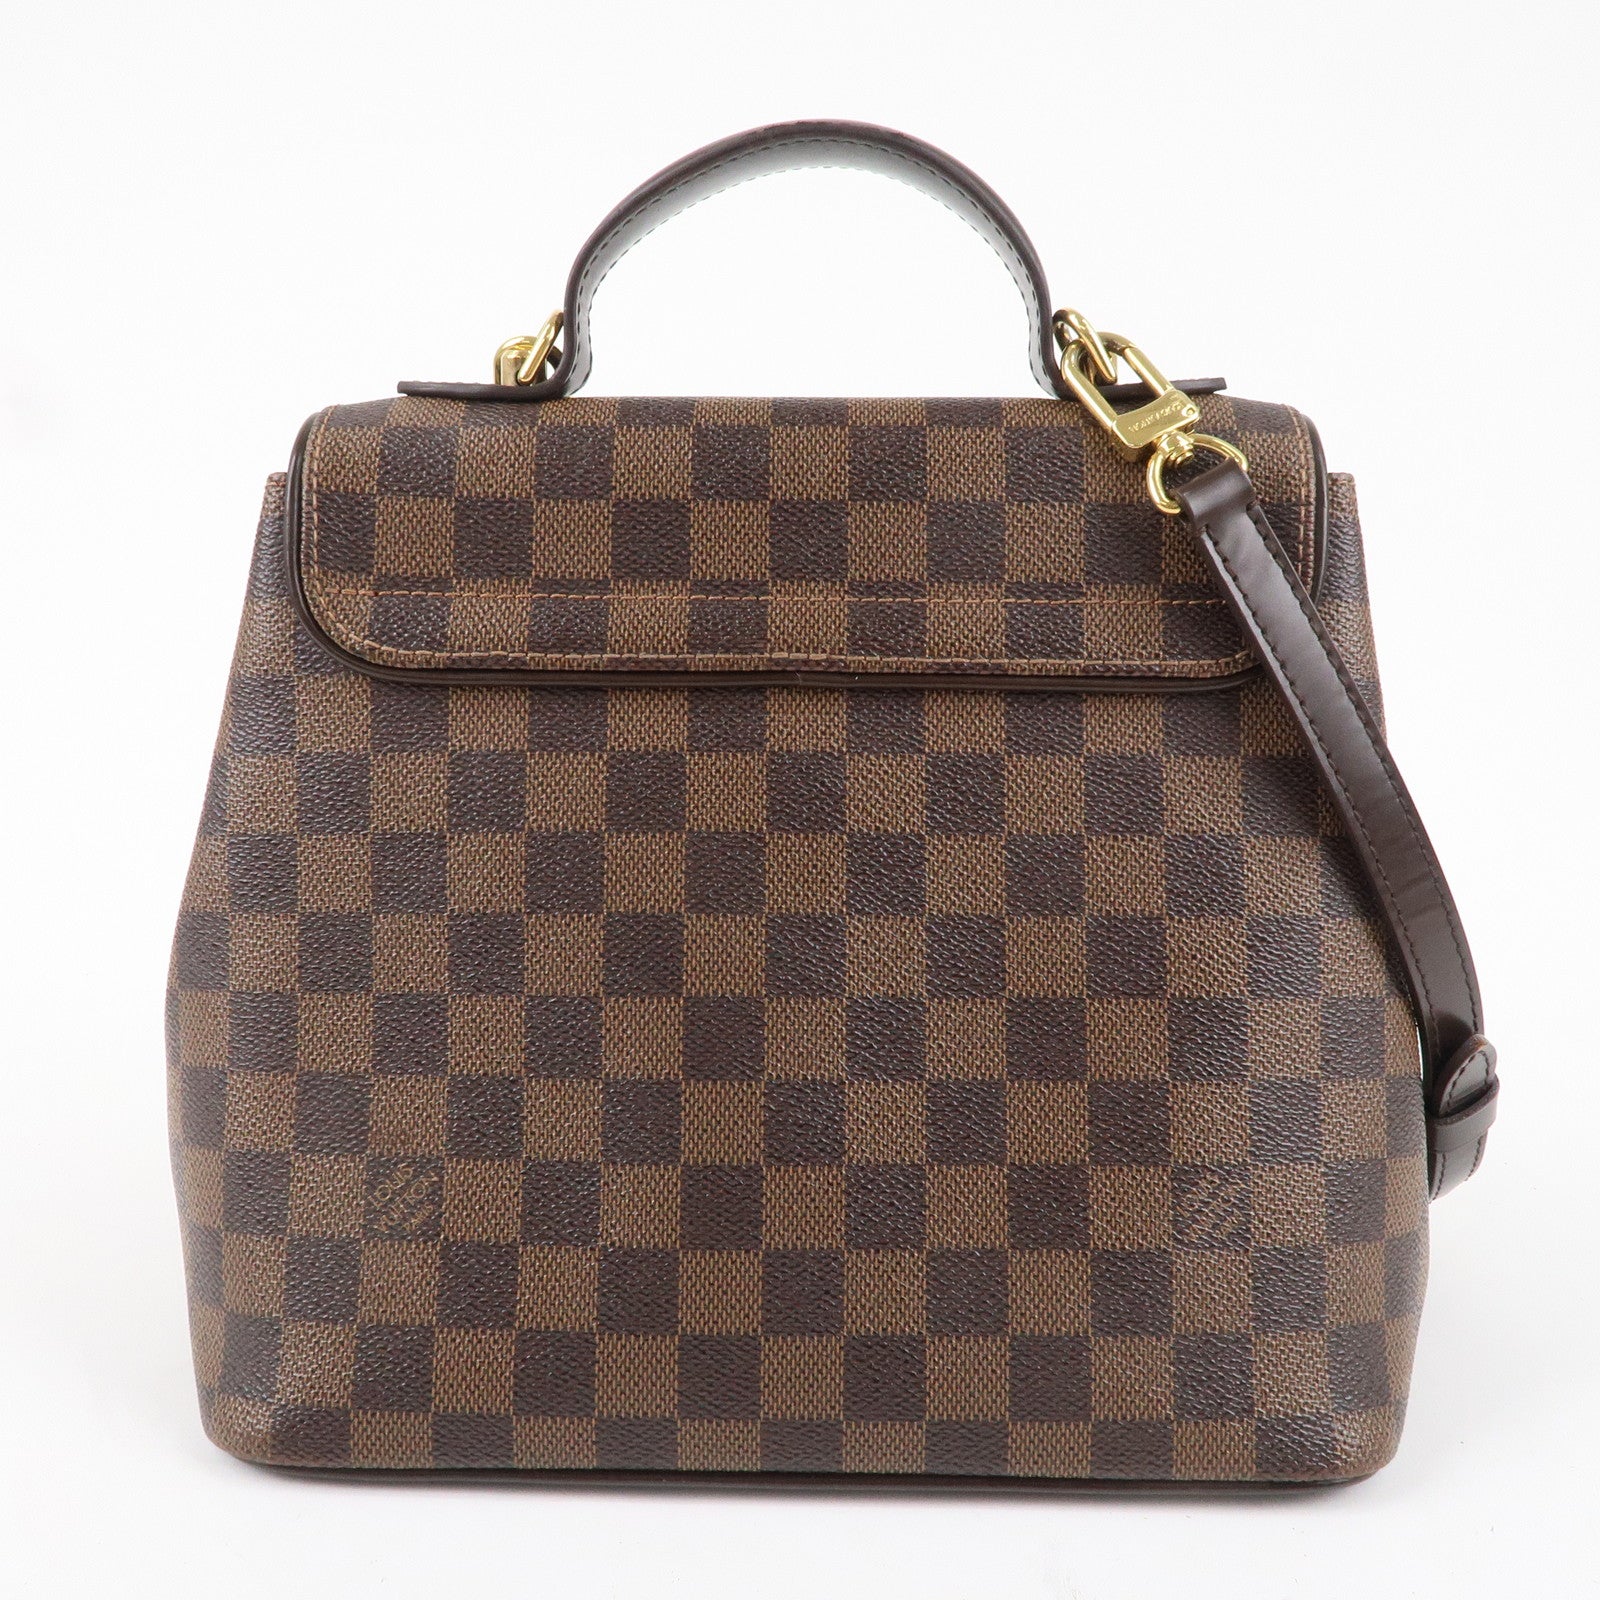 Louis Vuitton Bergamo handbag in brown damier canvas and brown leather